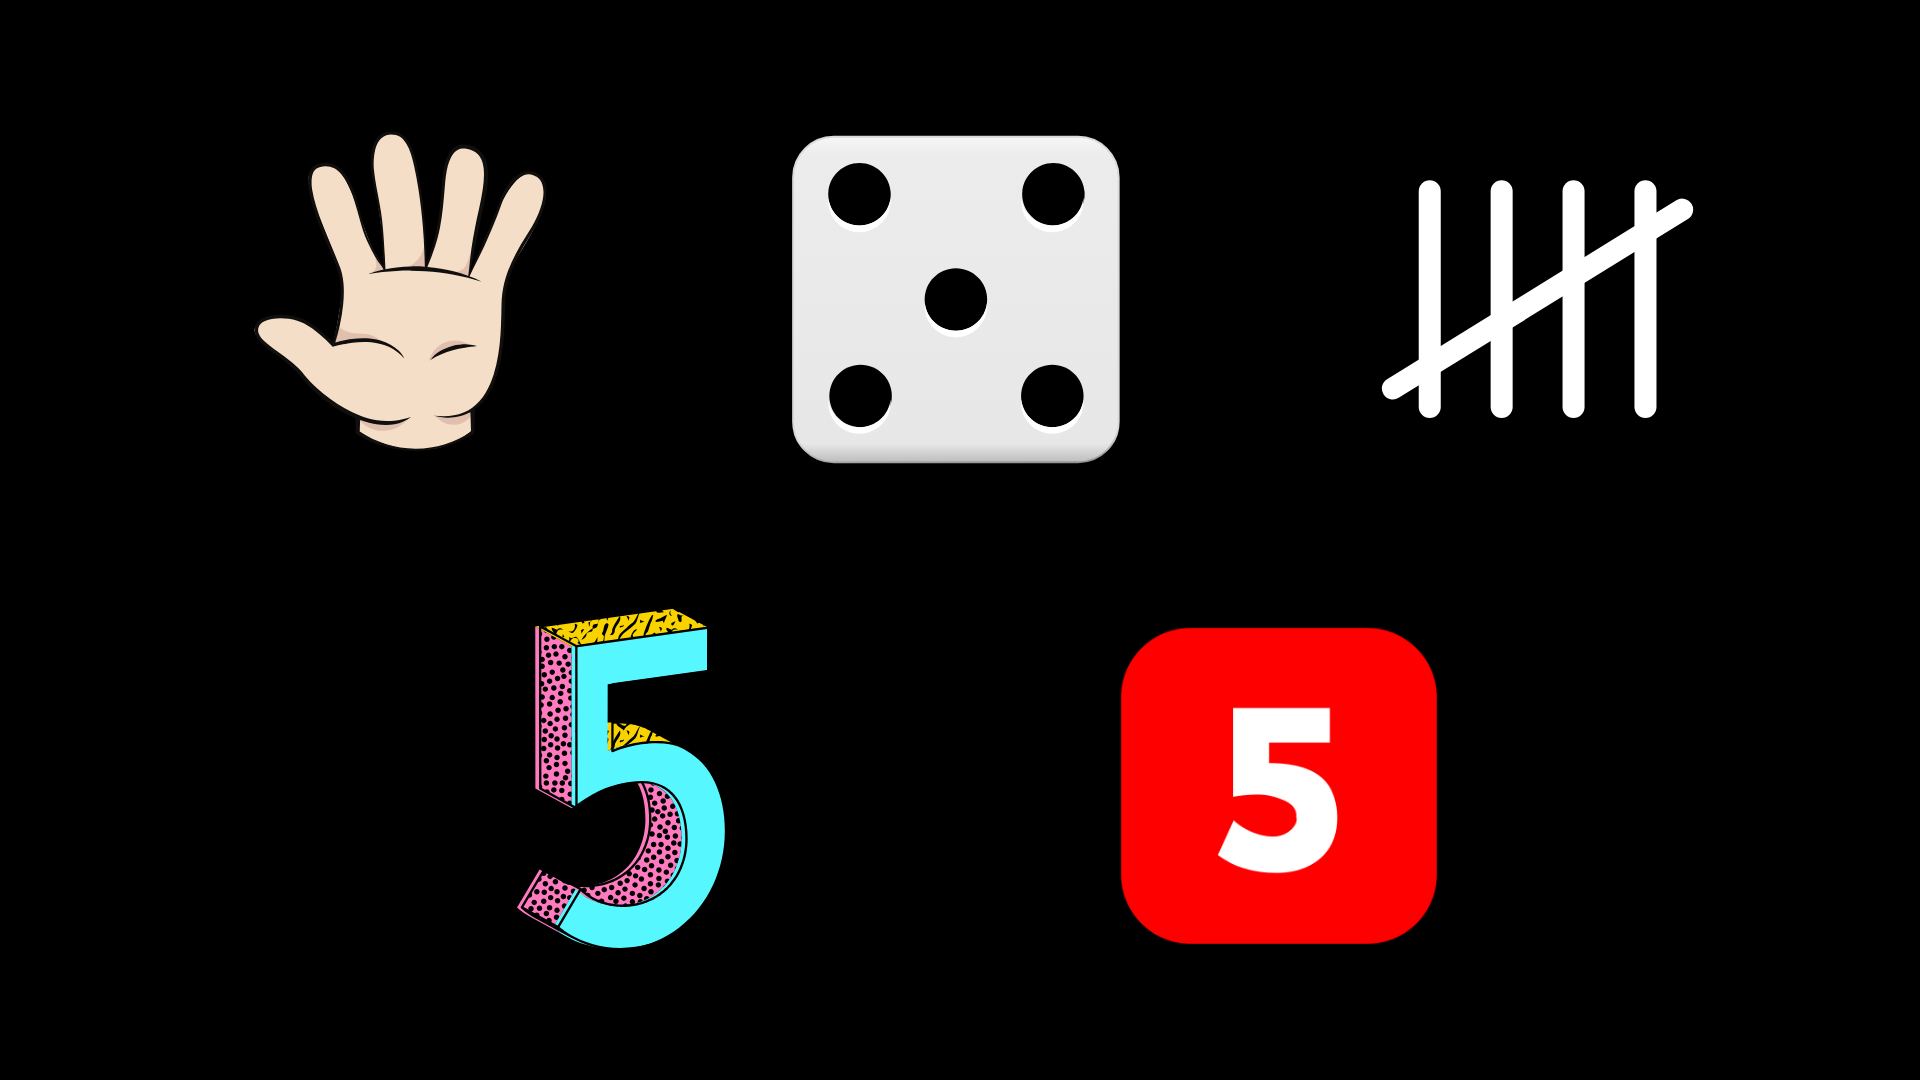 Symbols for 5